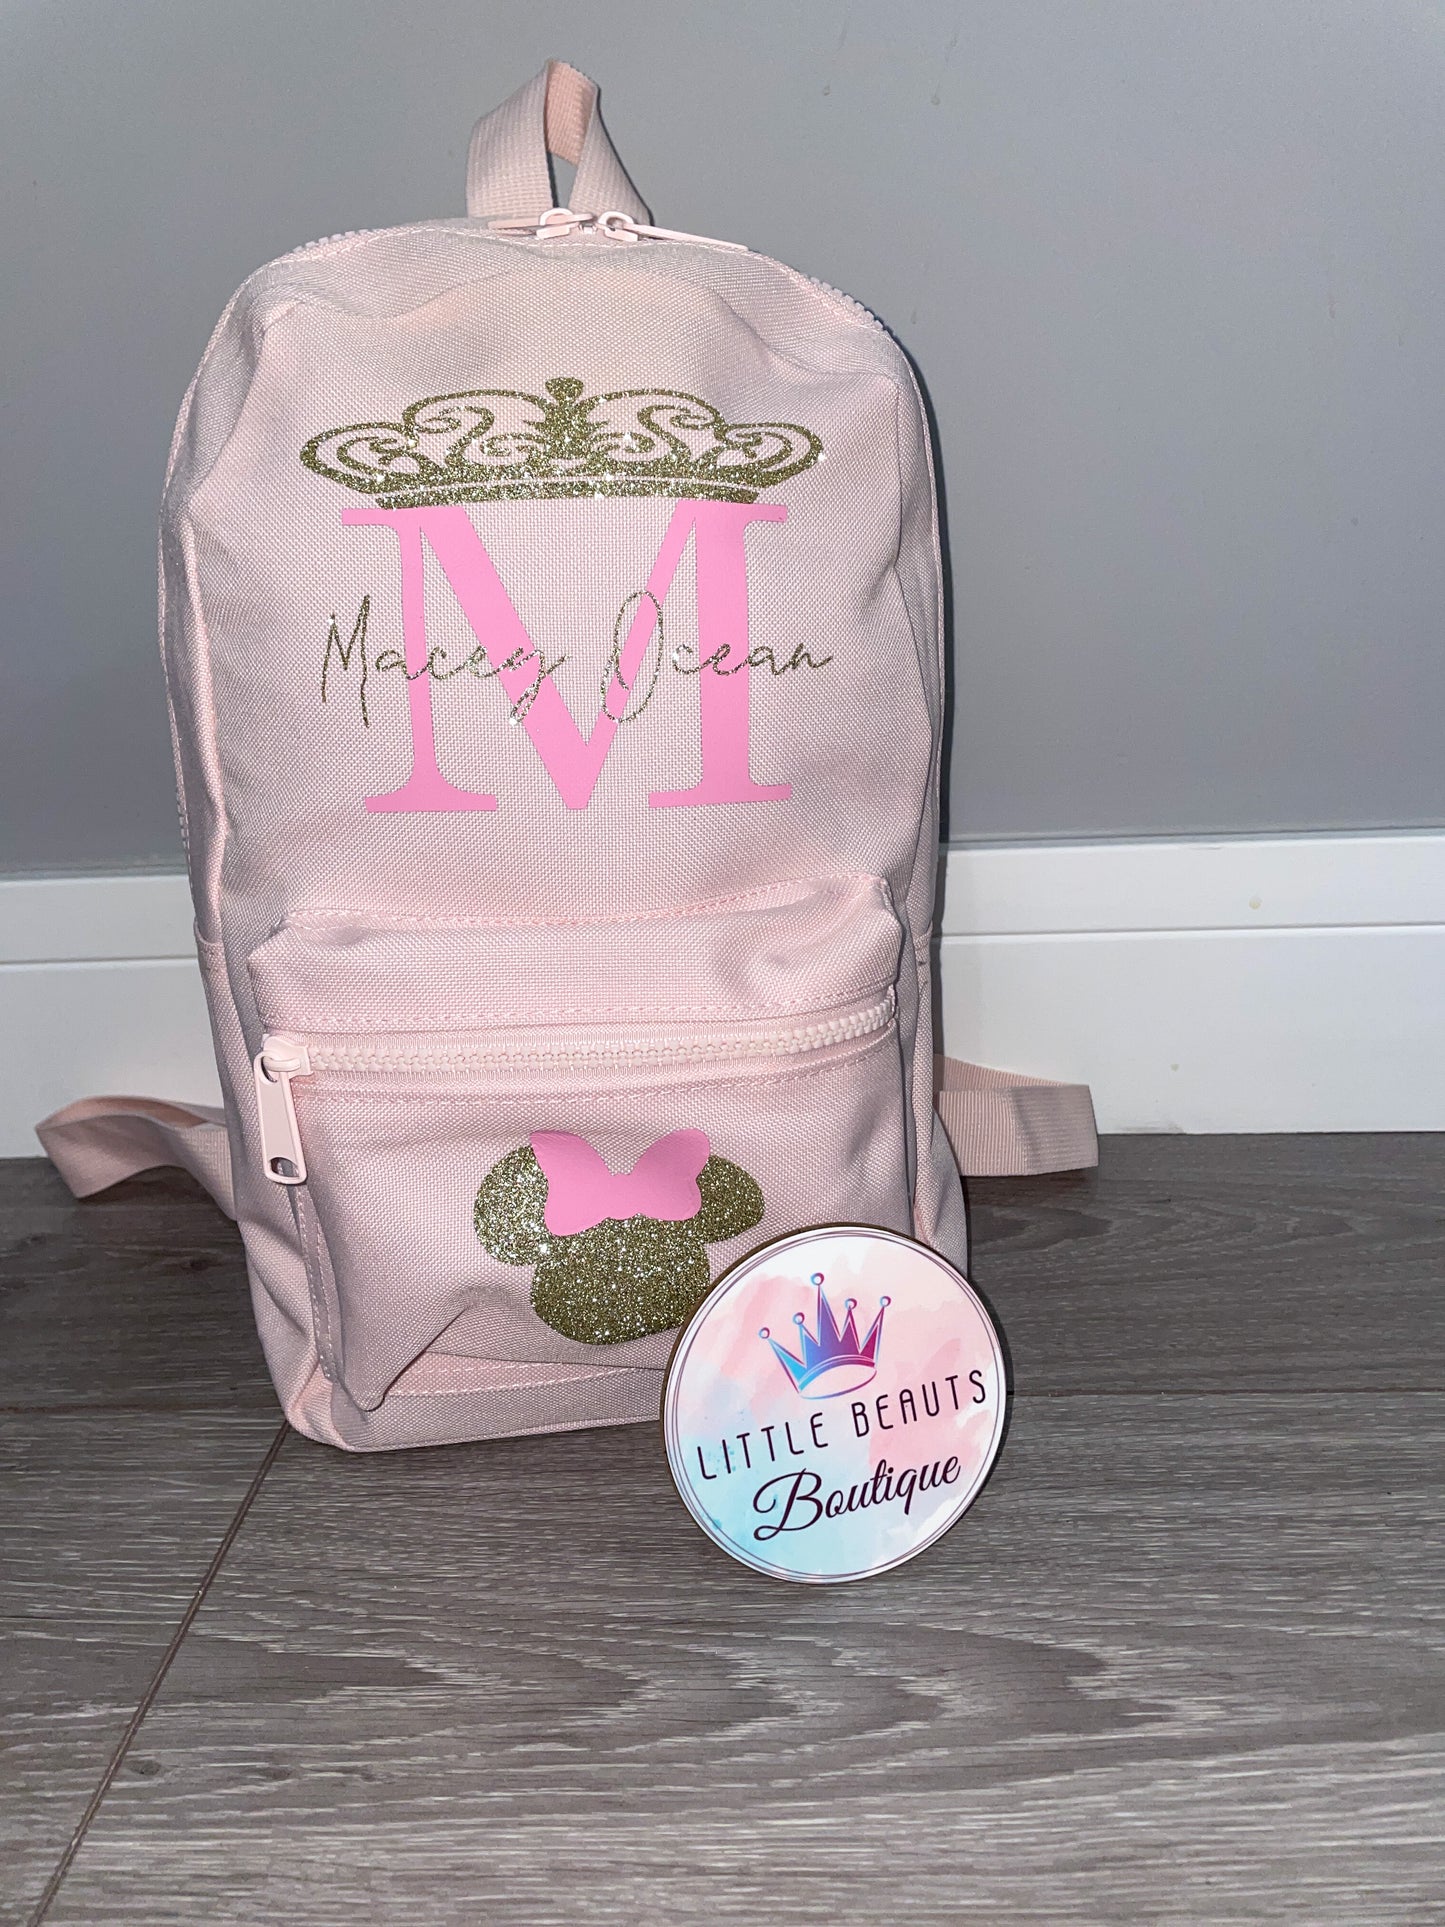 Personalised Initial Name Crown & Pocket Image Mini Backpack - Back To School / Nursey